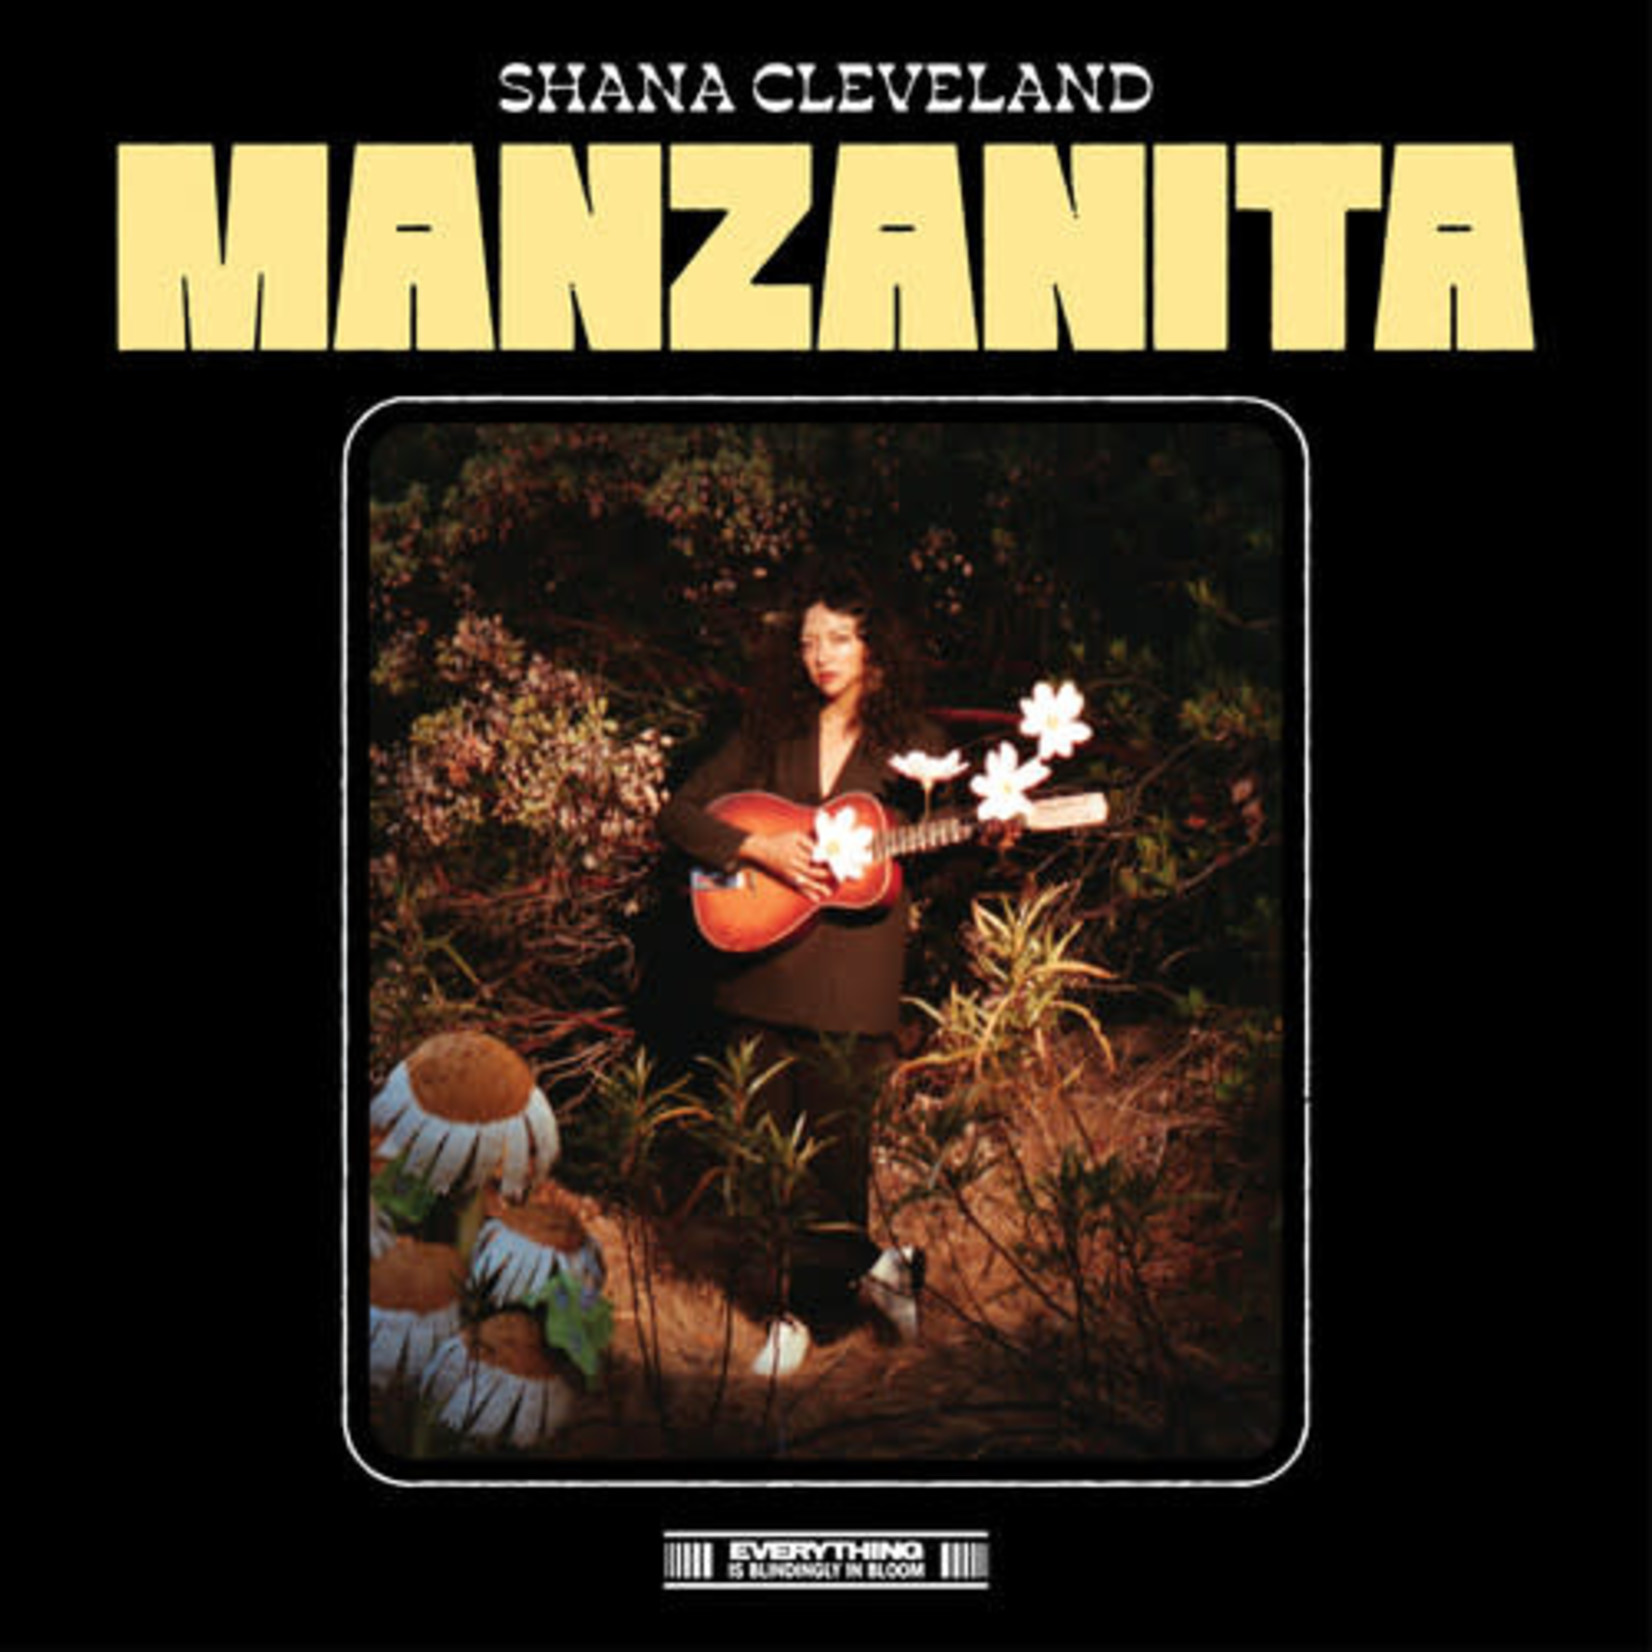 Hardly Art Shana Cleveland - Manzanita (LP) [Maroon]